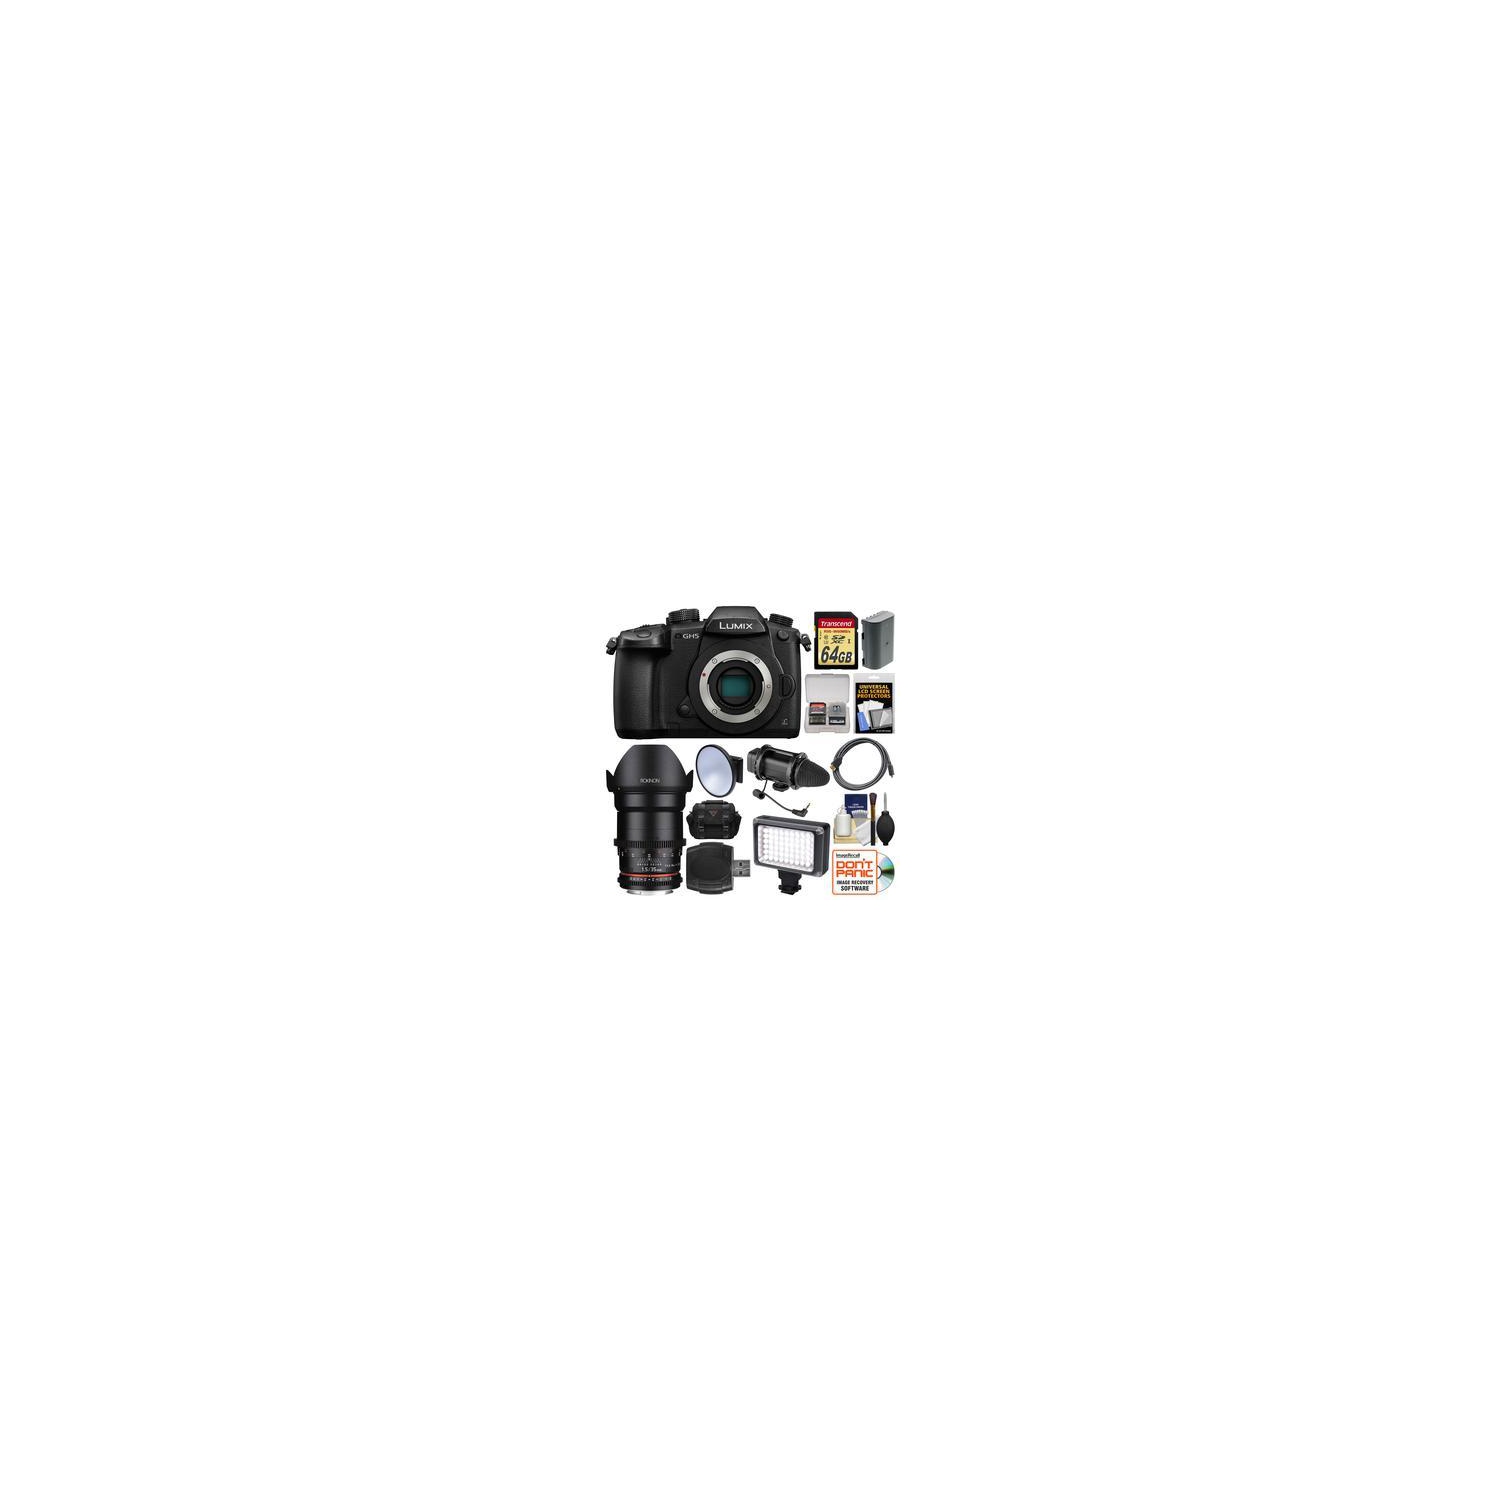 Panasonic Lumix DC-GH5 Wi-Fi 4K Digital Camera Body with 35mm T/1.5 Cine Lens + 64GB Card + Case + LED Light & Diffuser + Micr - US Version w/ Seller Warranty